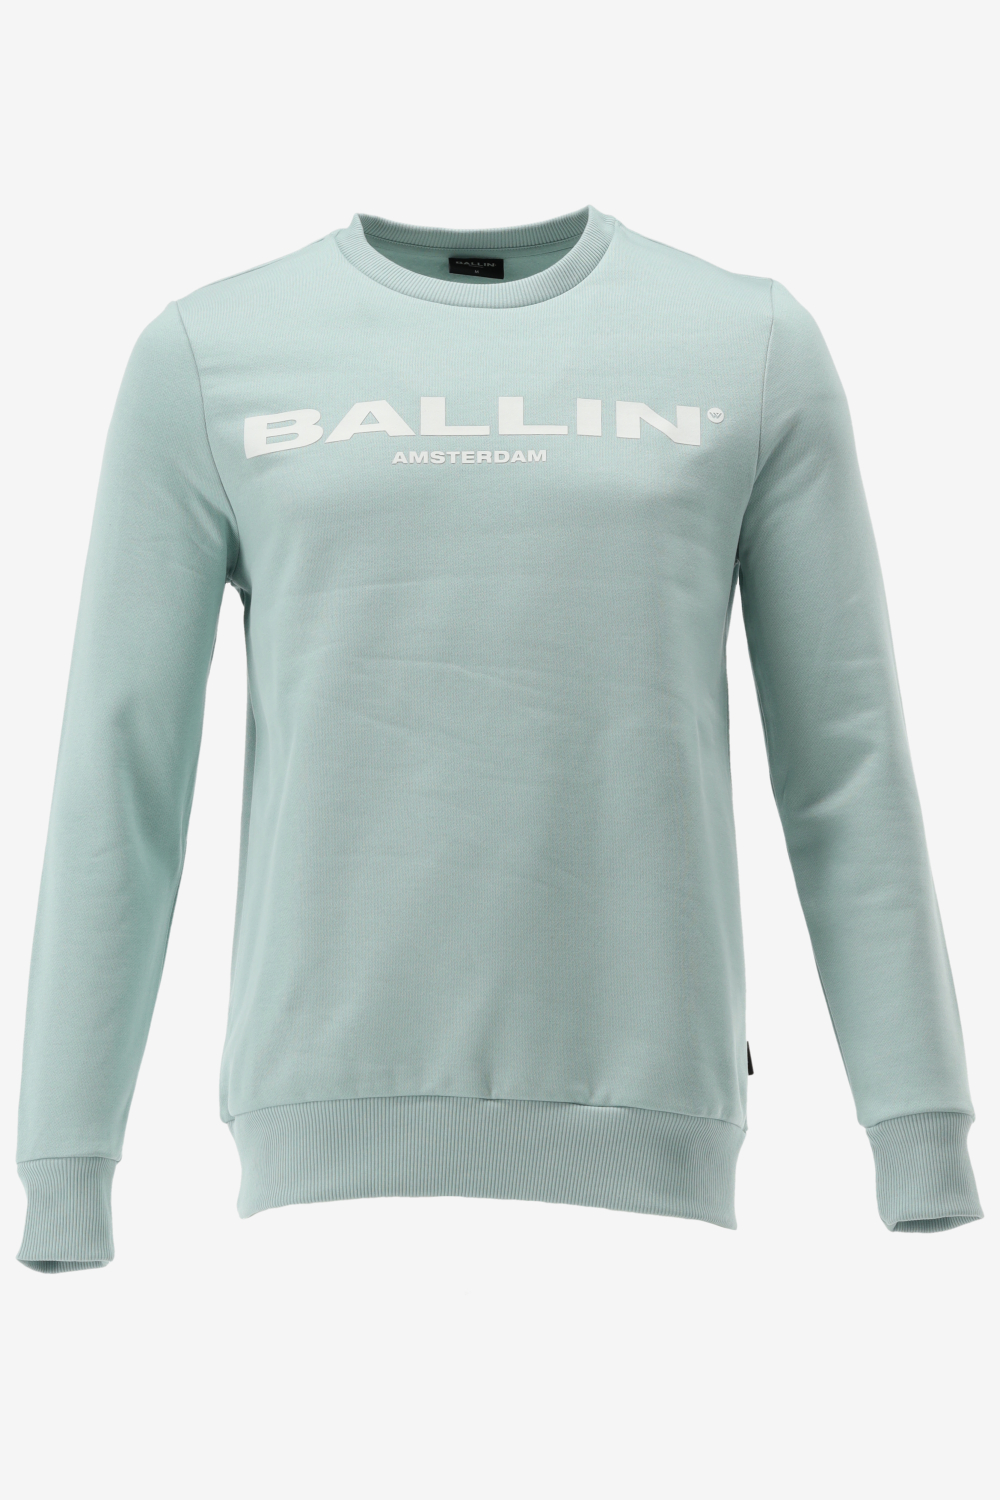 Ballin Amsterdam -  Heren Slim Fit  Original Sweater  - Groen - Maat M